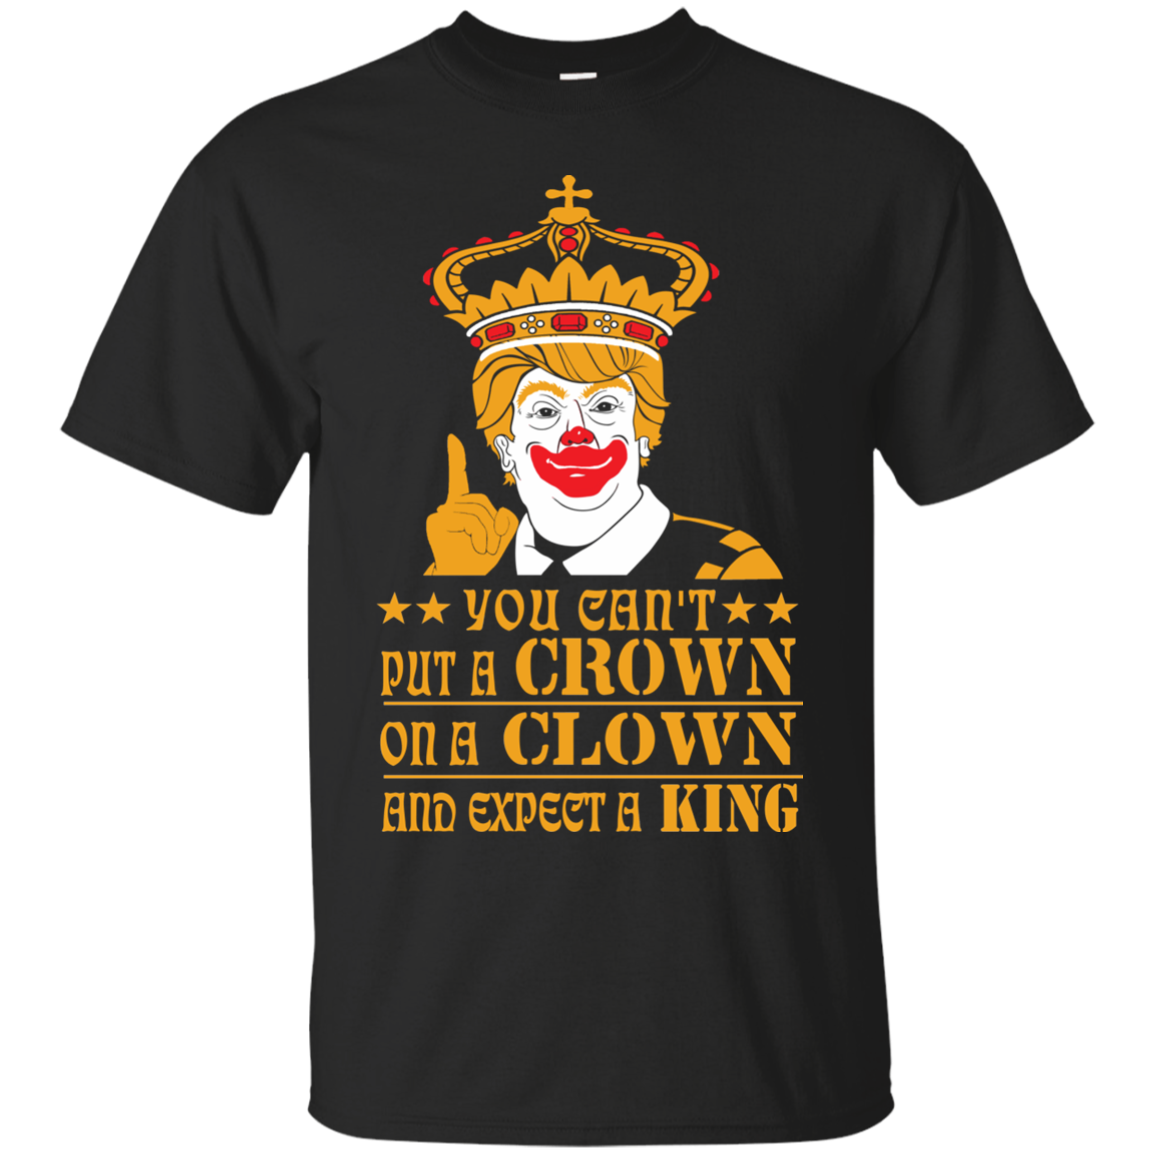 Clown King Shirts You Can't Put A Crown On A Clown - Teesmiley